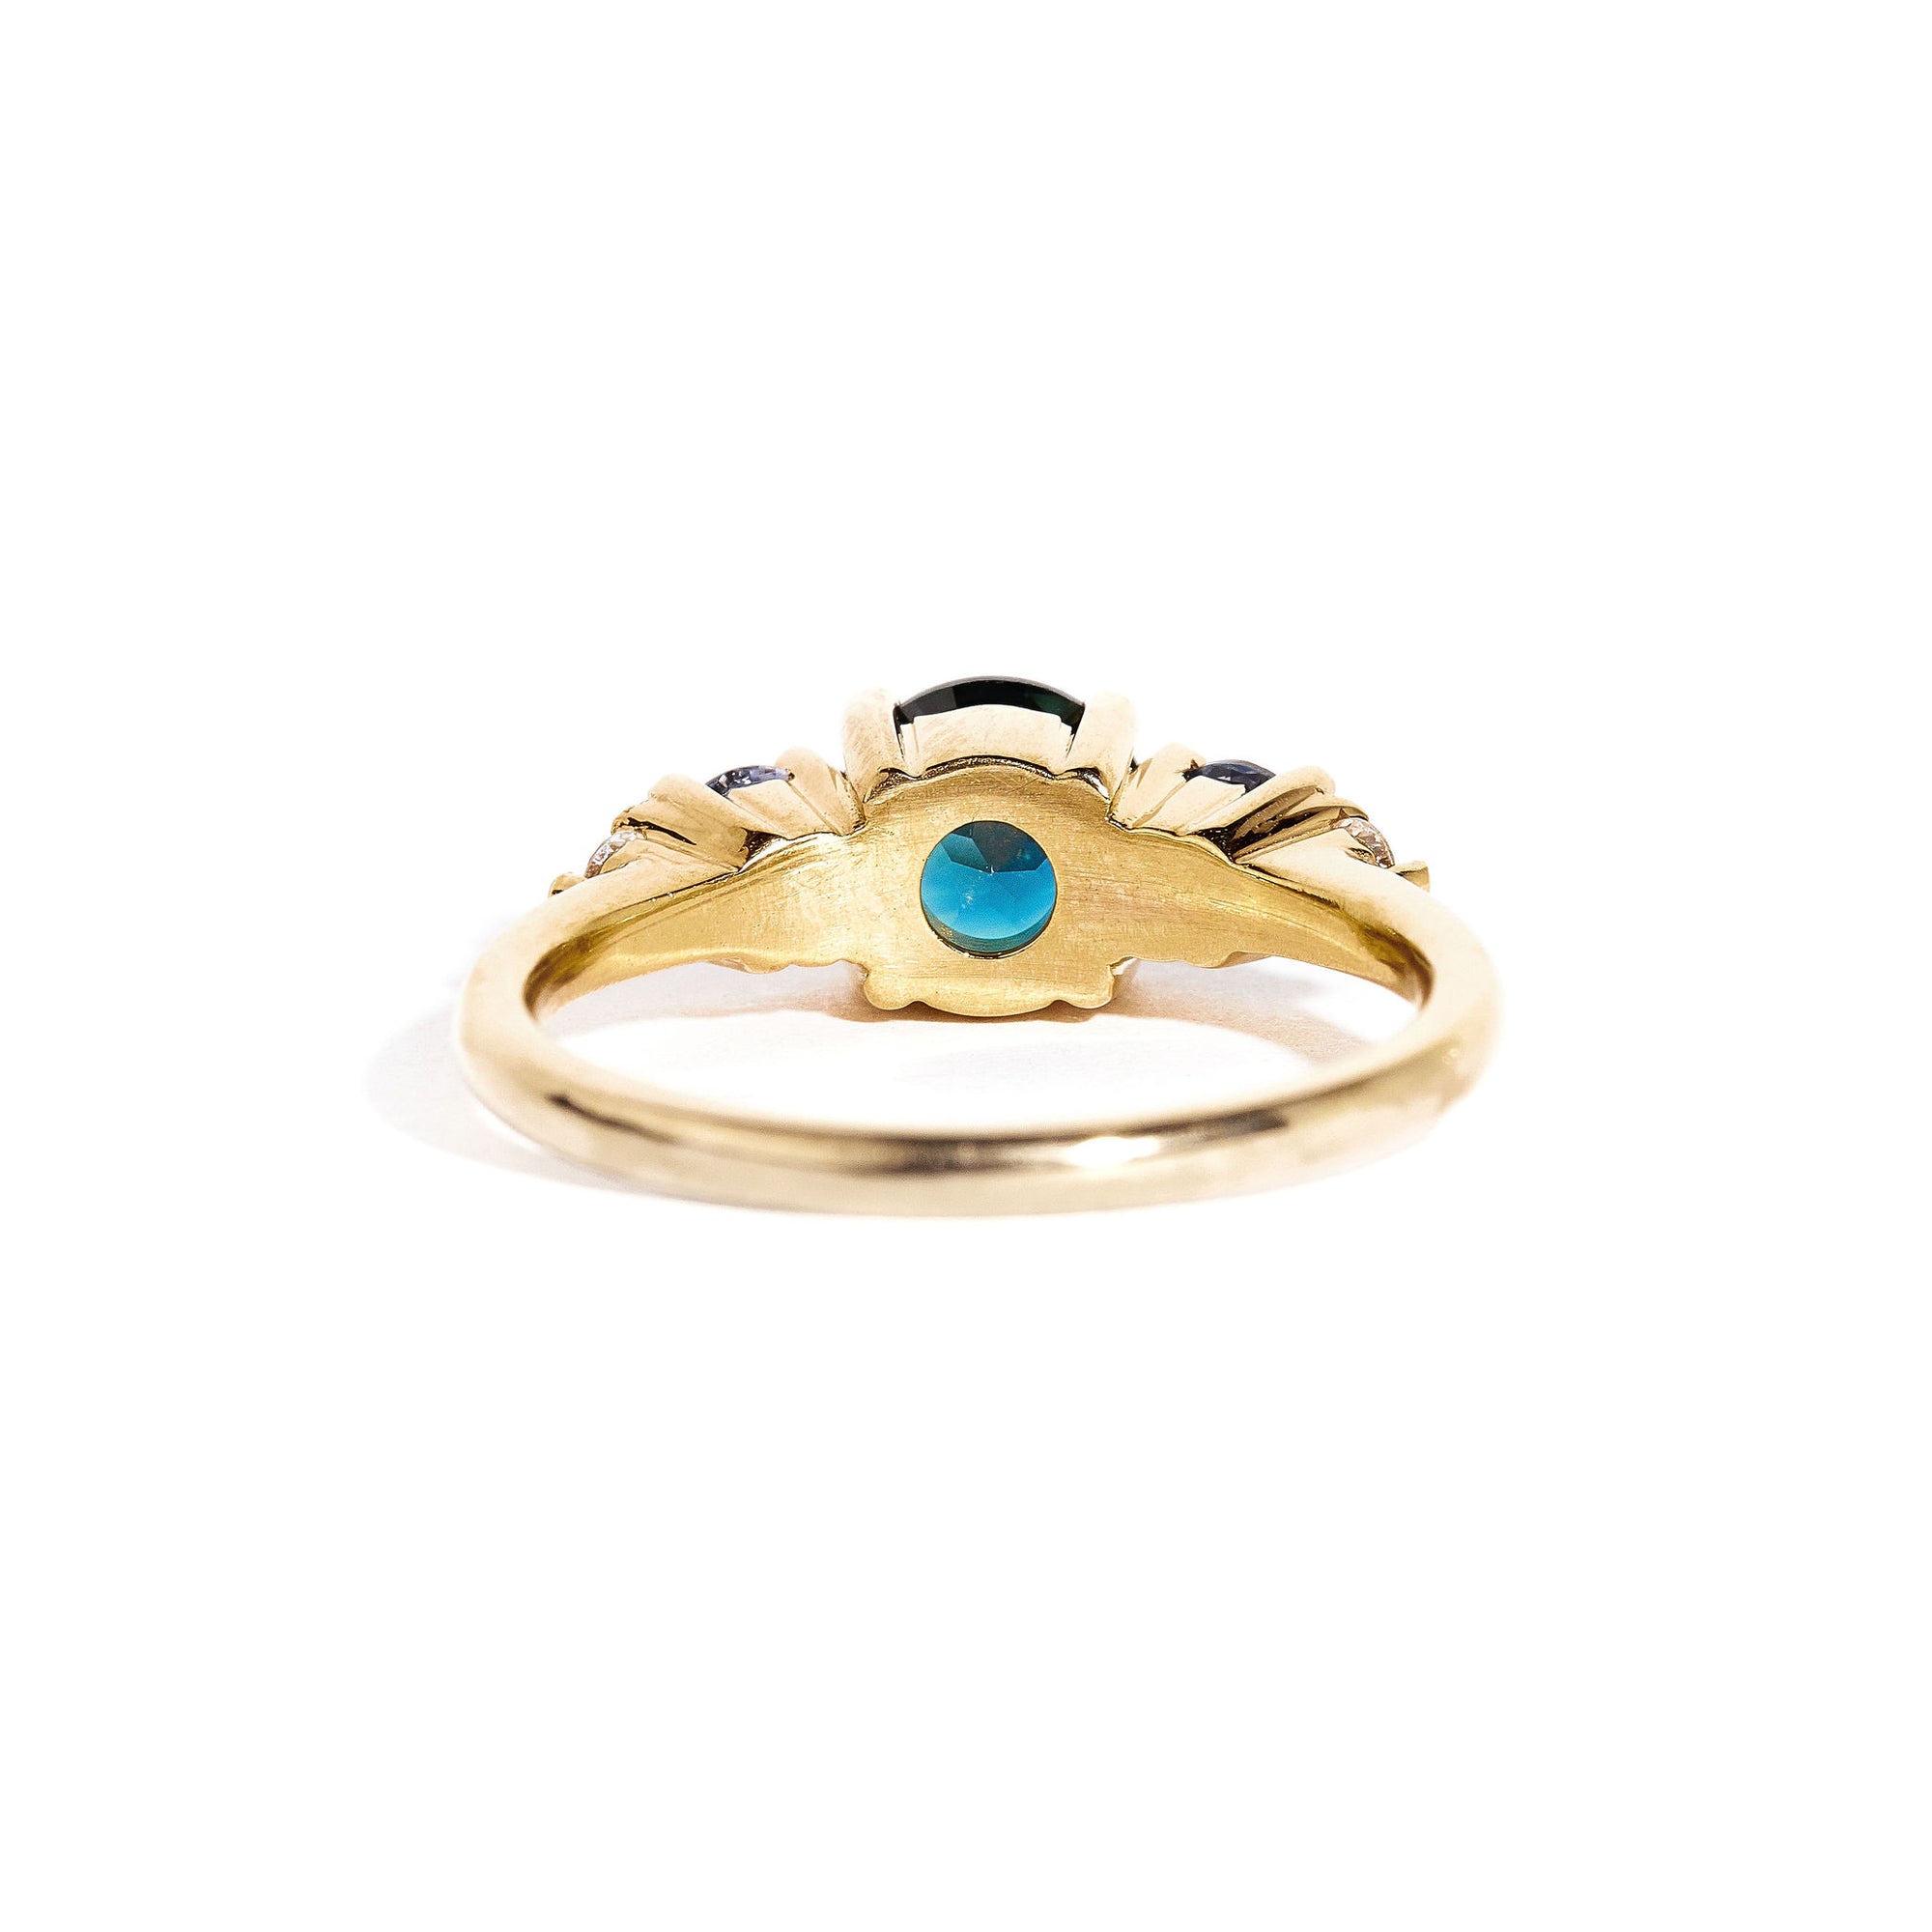 Australian Sapphires and Diamond Ring | Handmade Engagement Ring in 18ct Yellow Gold